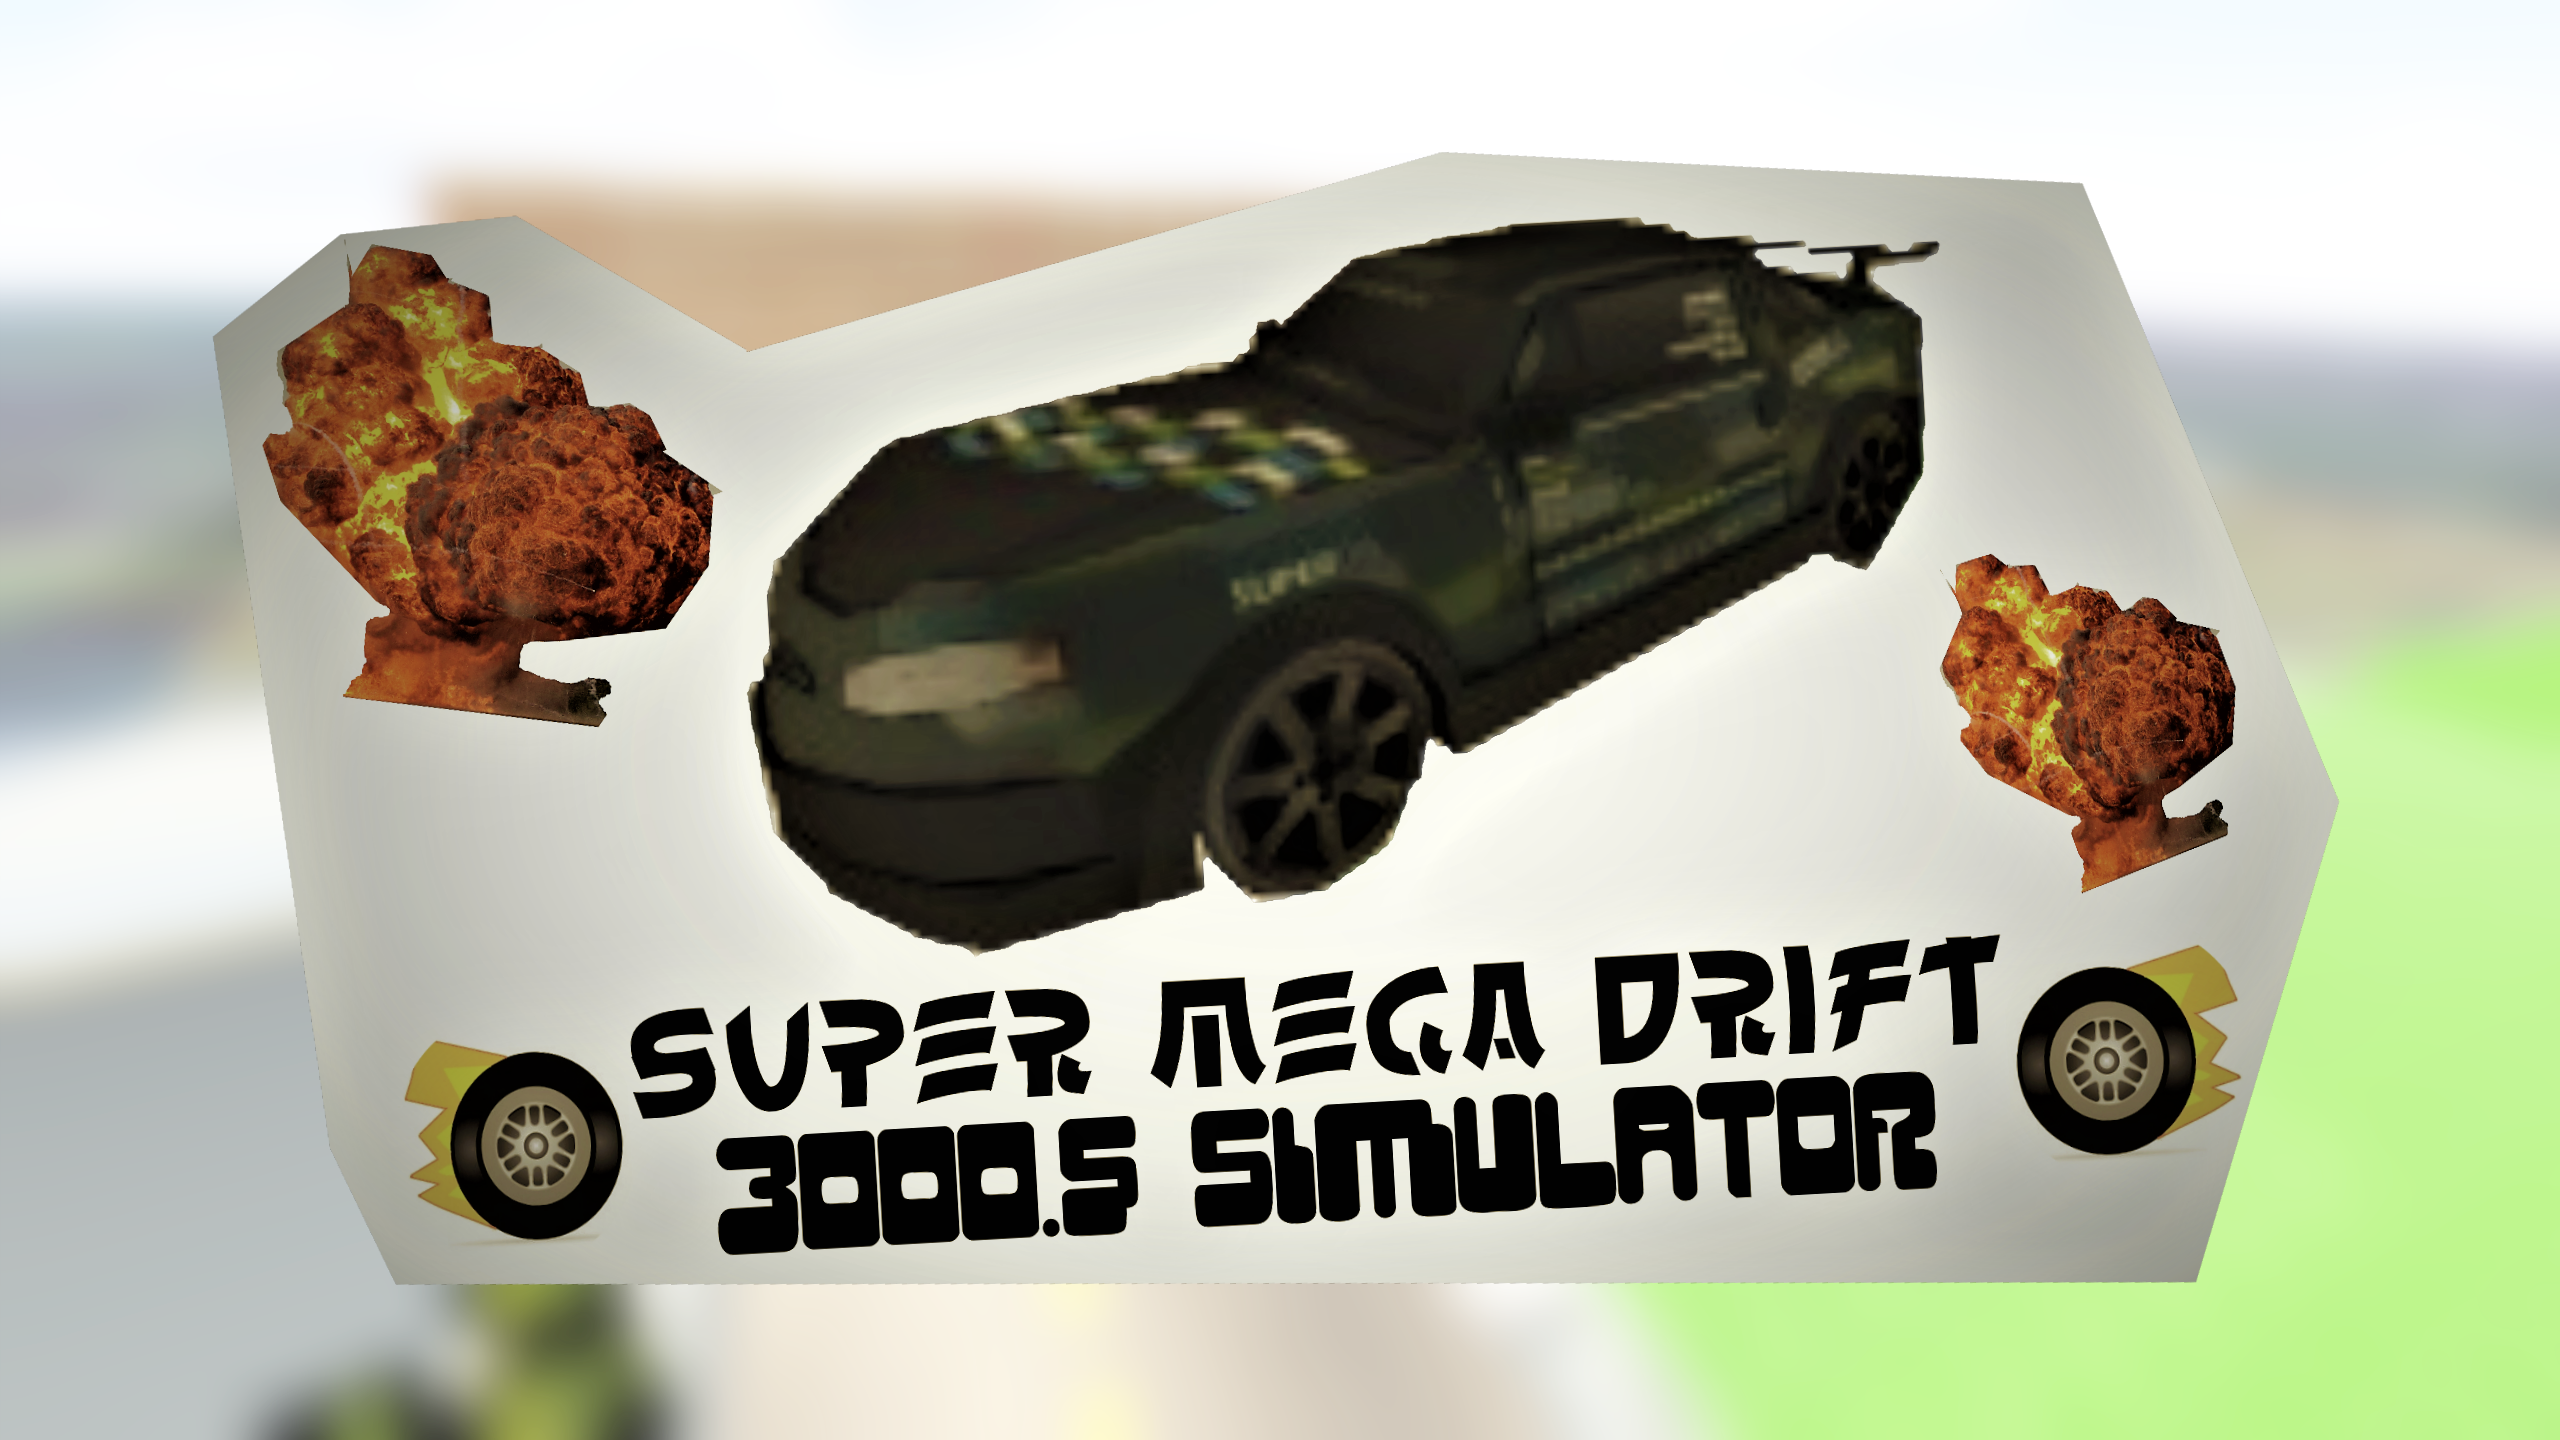 Super MEGA Drift 3000.5 SIMULATOR